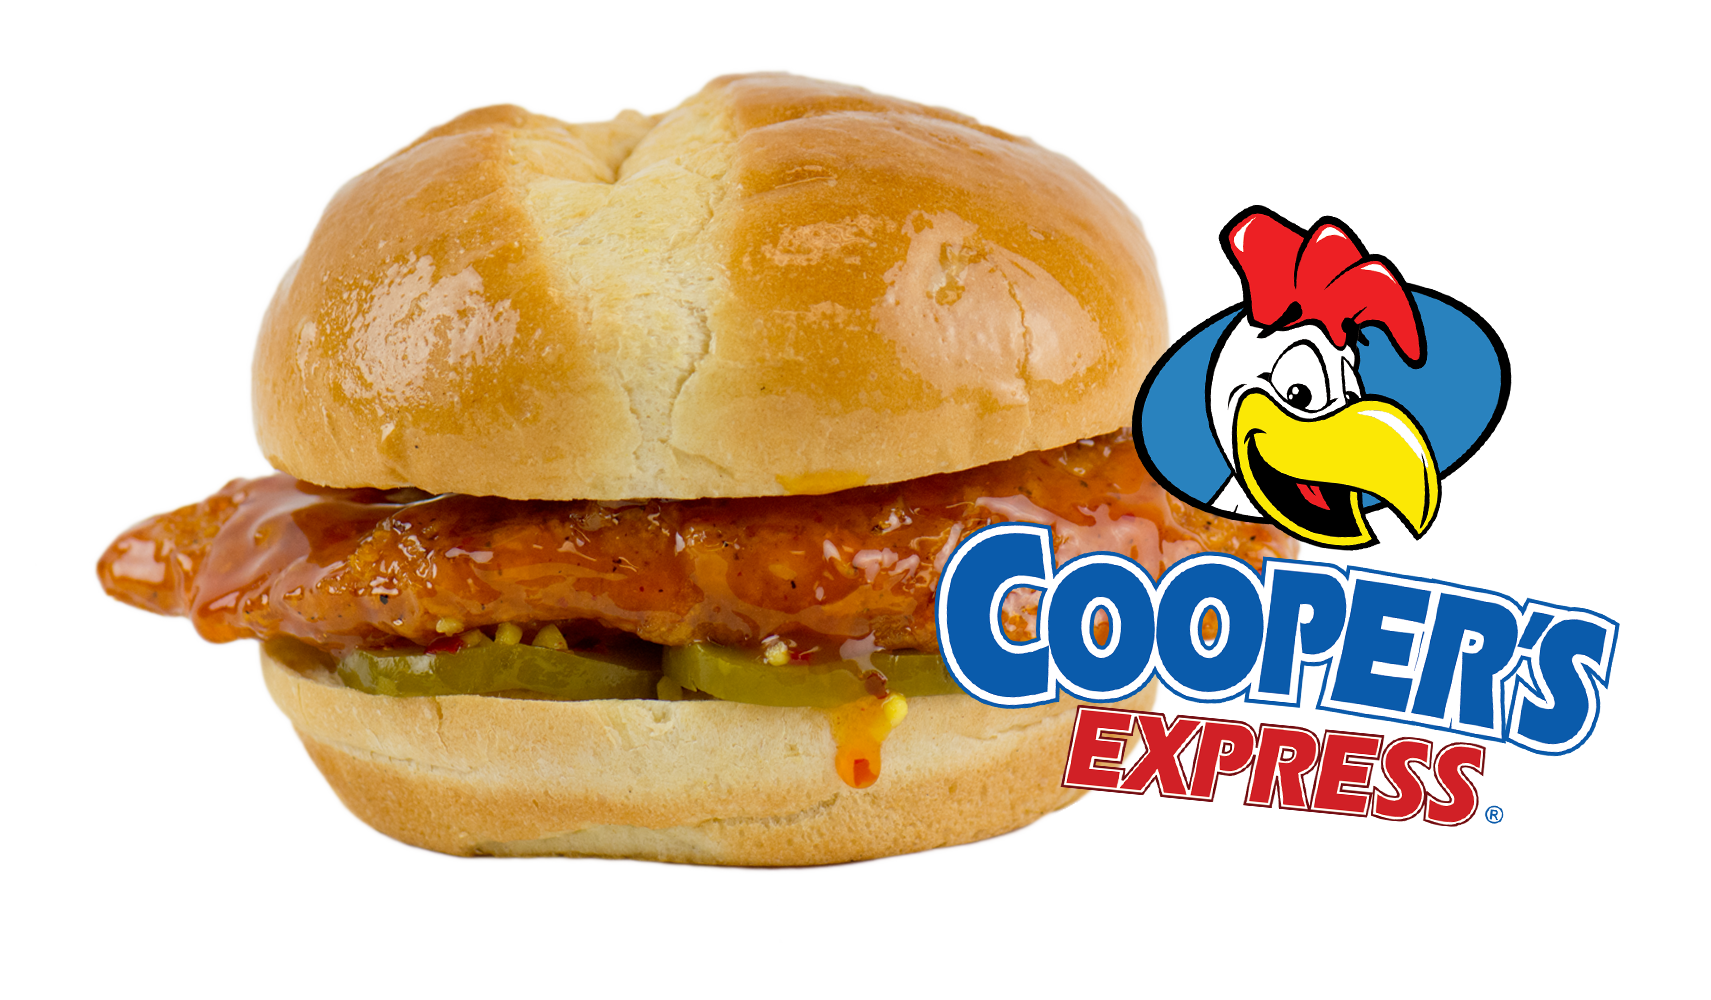 Cooper's Express